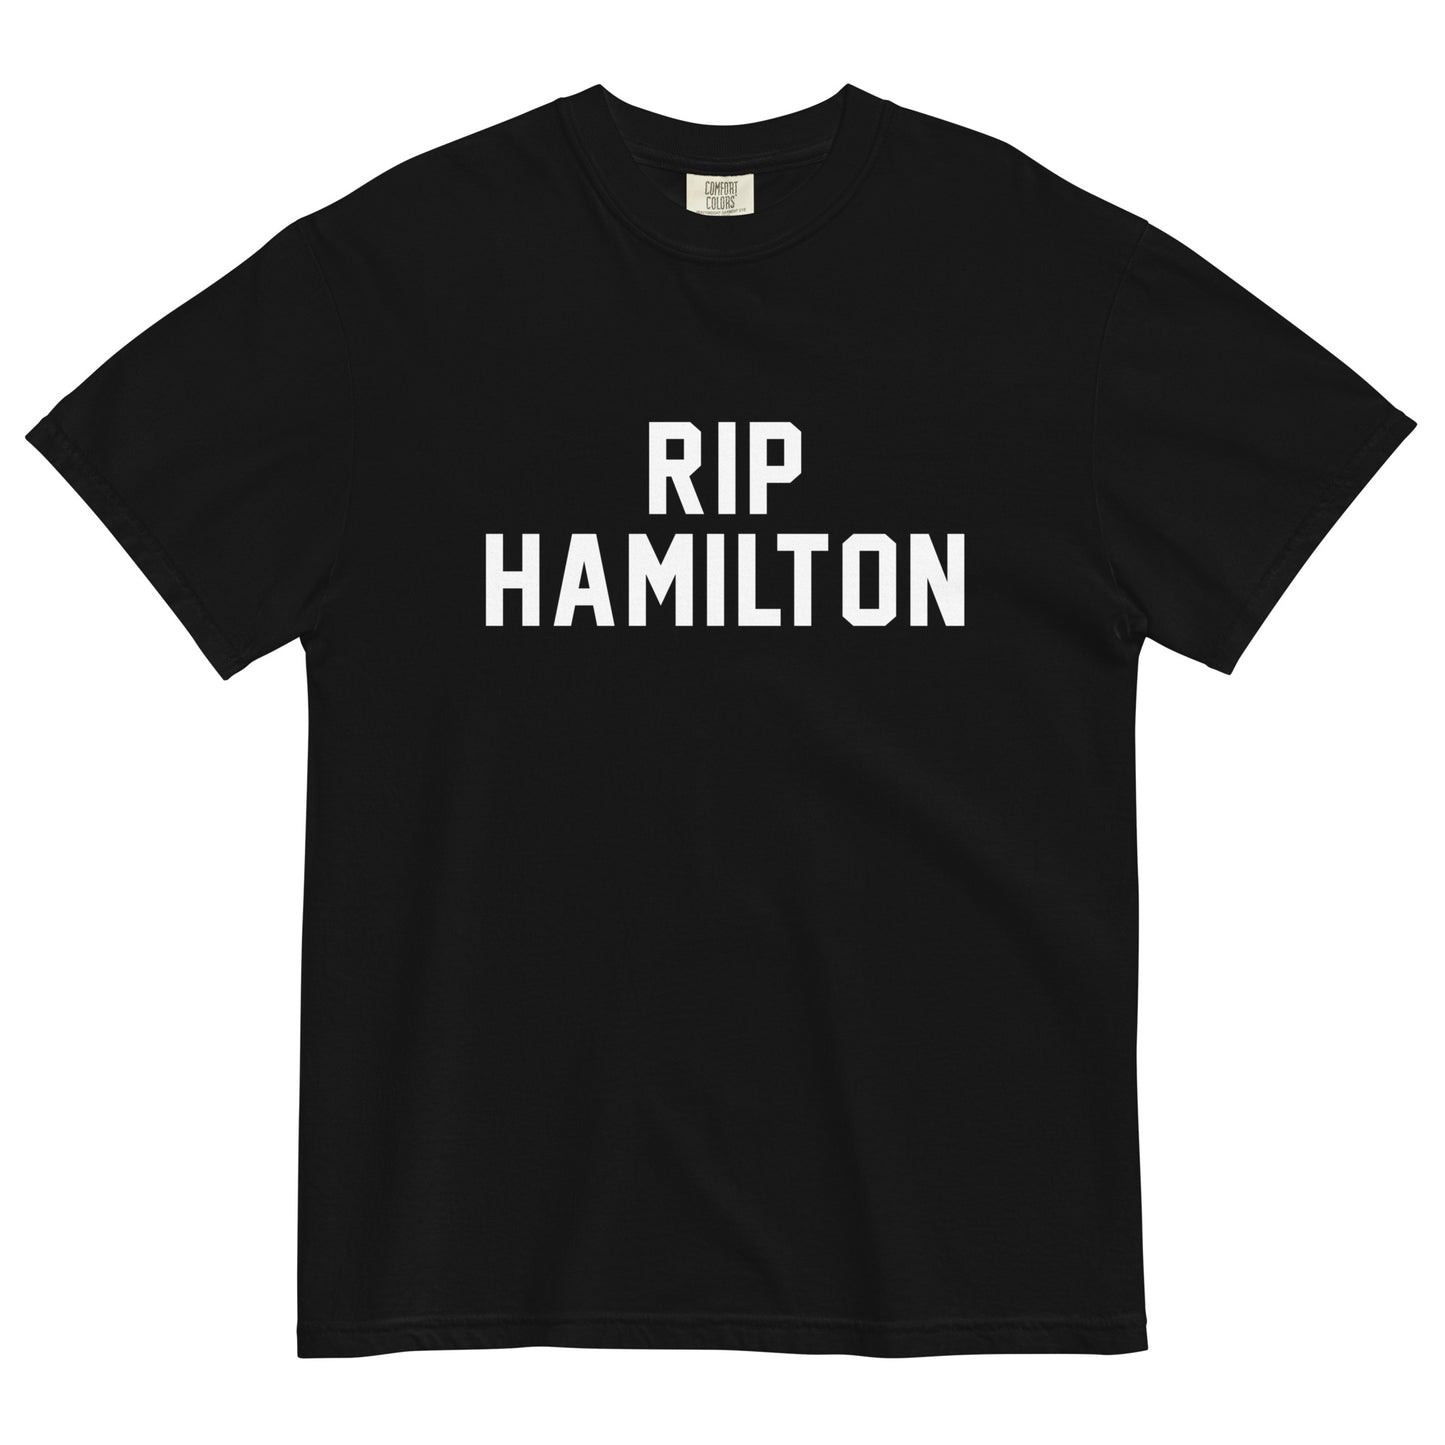 RIP HAMILTON